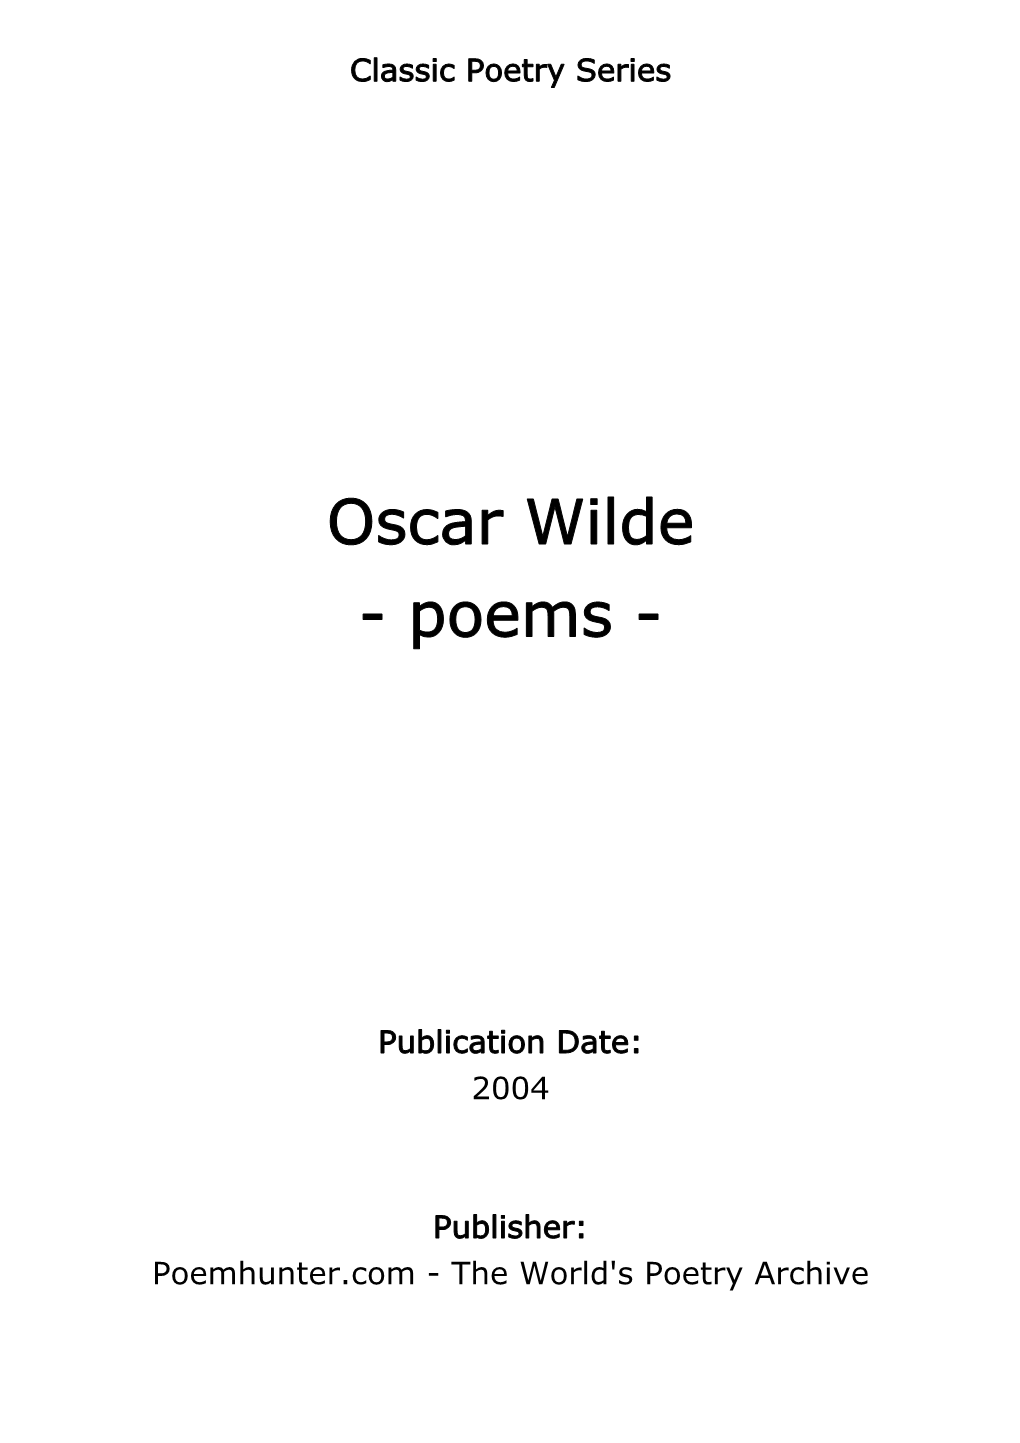 Oscar Wilde - Poems